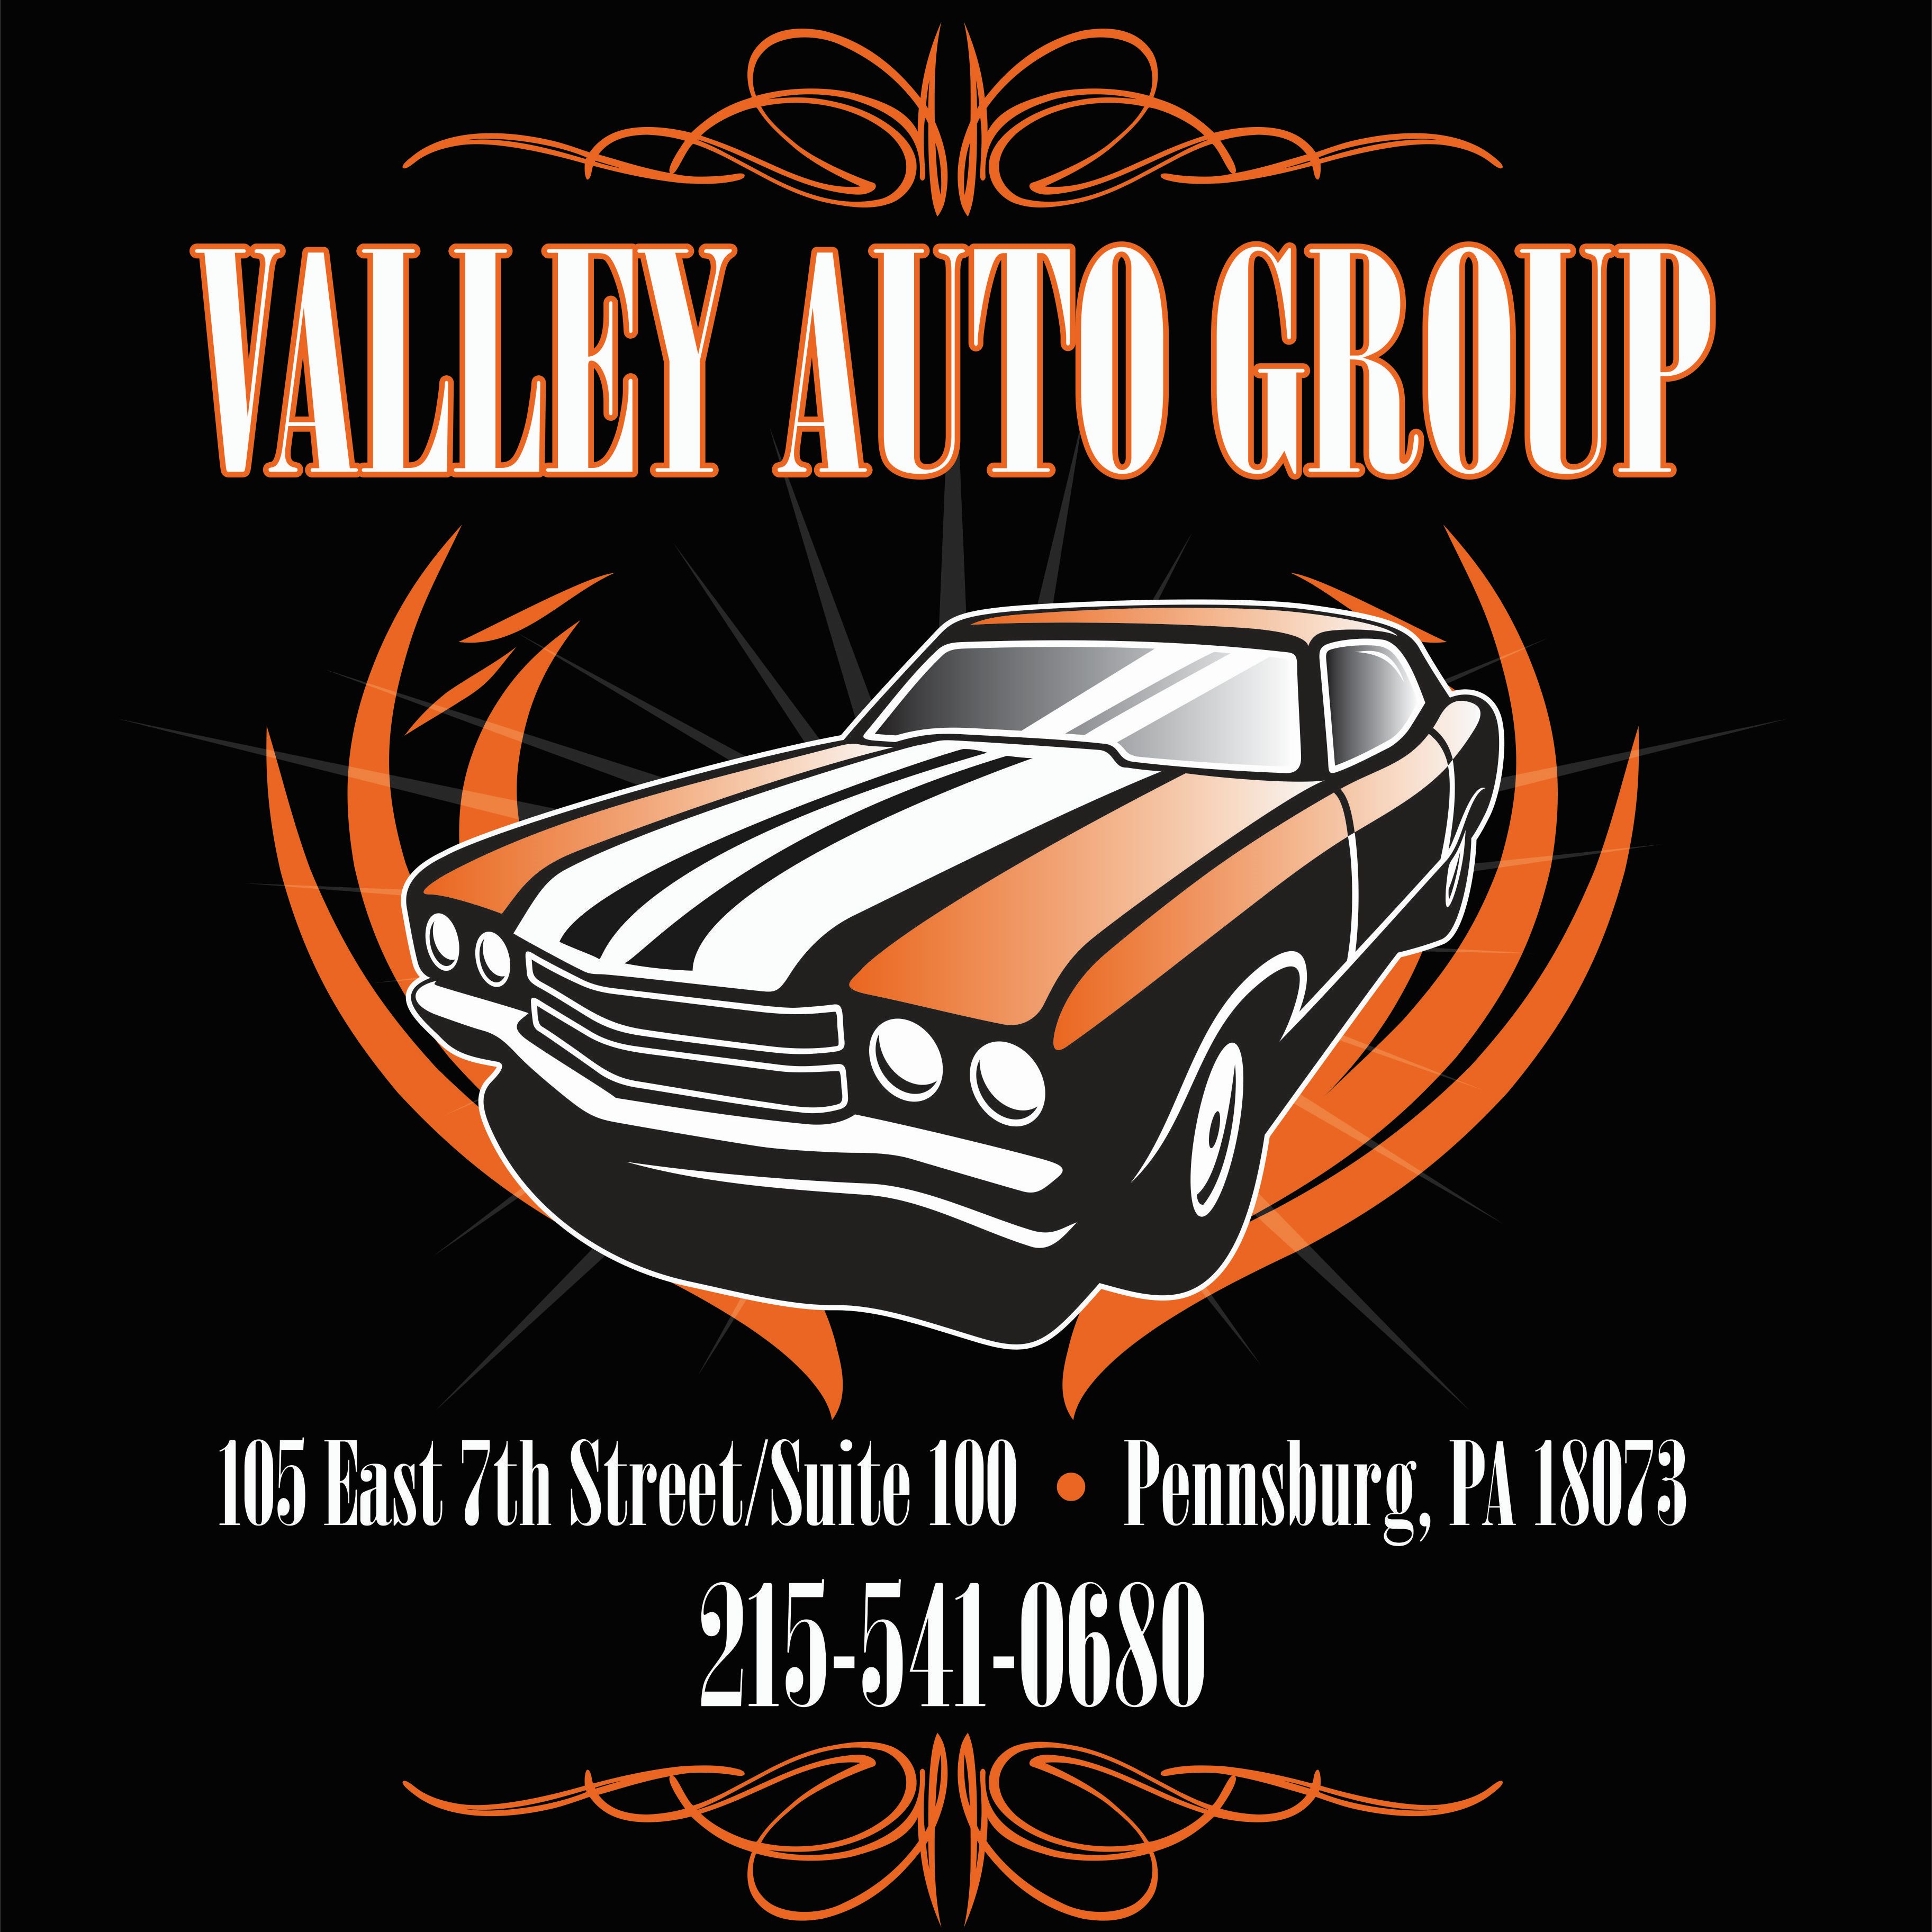 Valley Auto Group, Inc. Photo